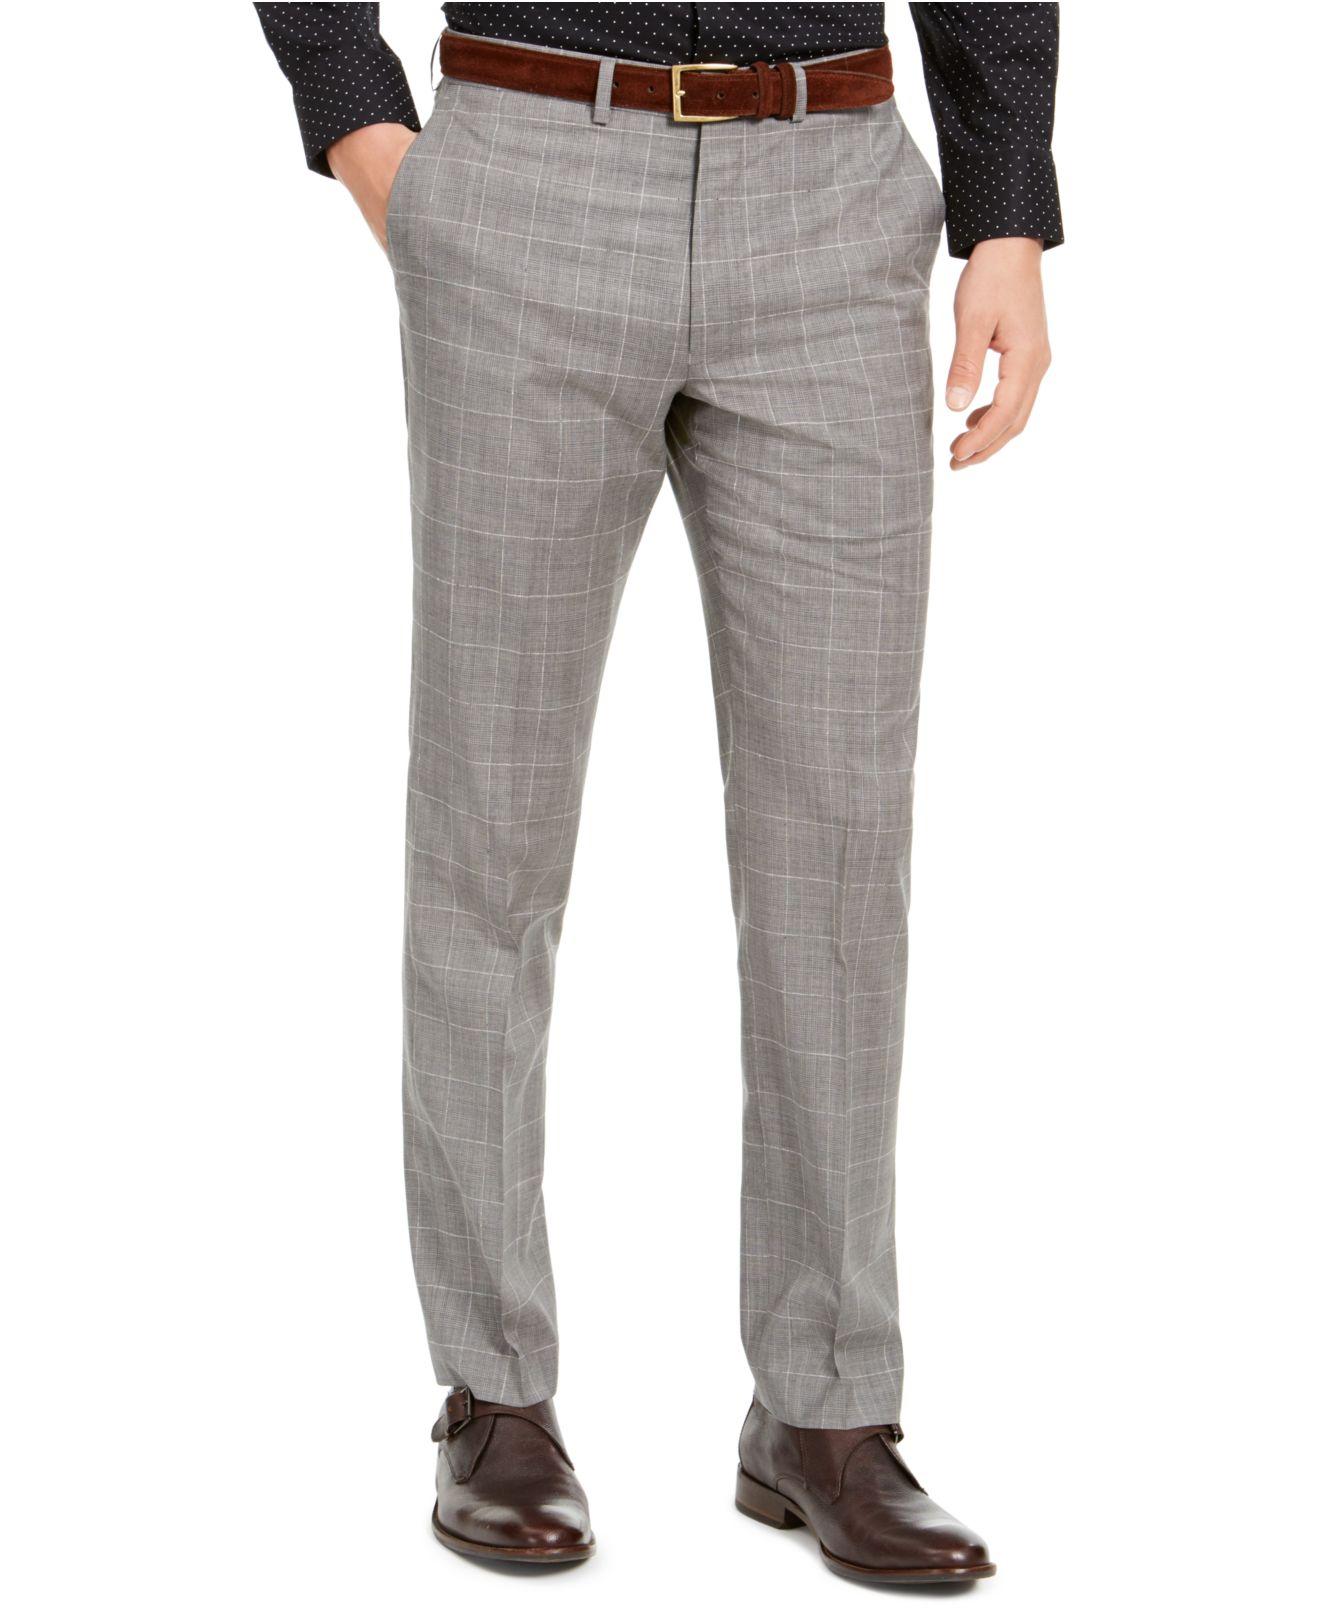 DKNY Wool Slim-fit Stretch Light Gray Plaid Suit Pants for Men - Lyst